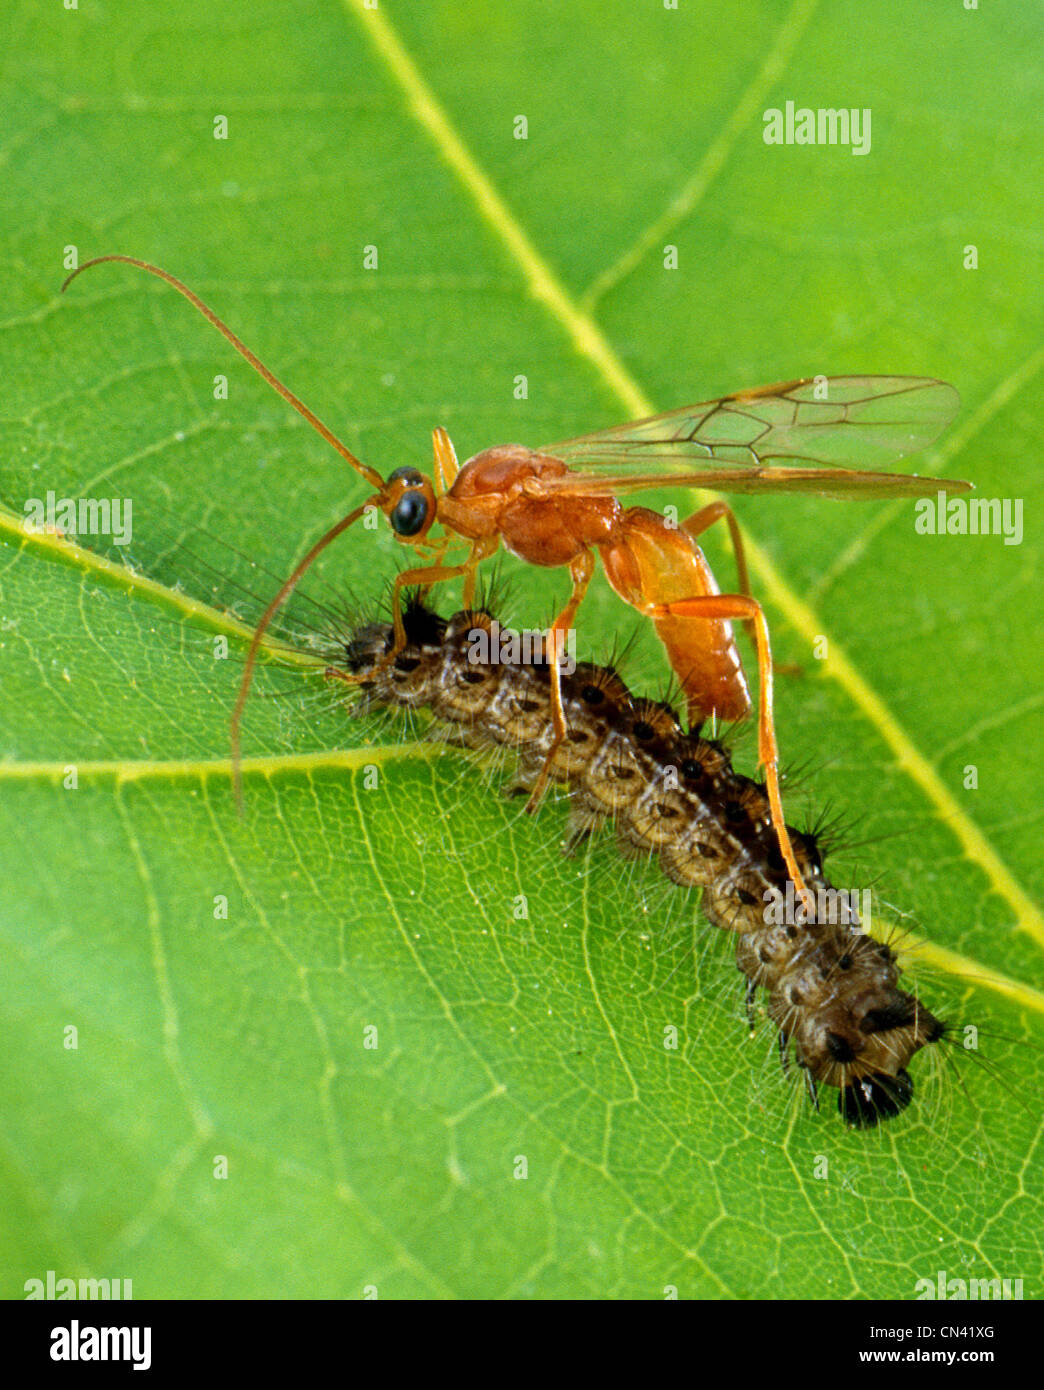 Wasp parasitizing un caterpillar. Aleiodes indiscretus wasp parasitizing un Gypsy Moth caterpillar Foto Stock